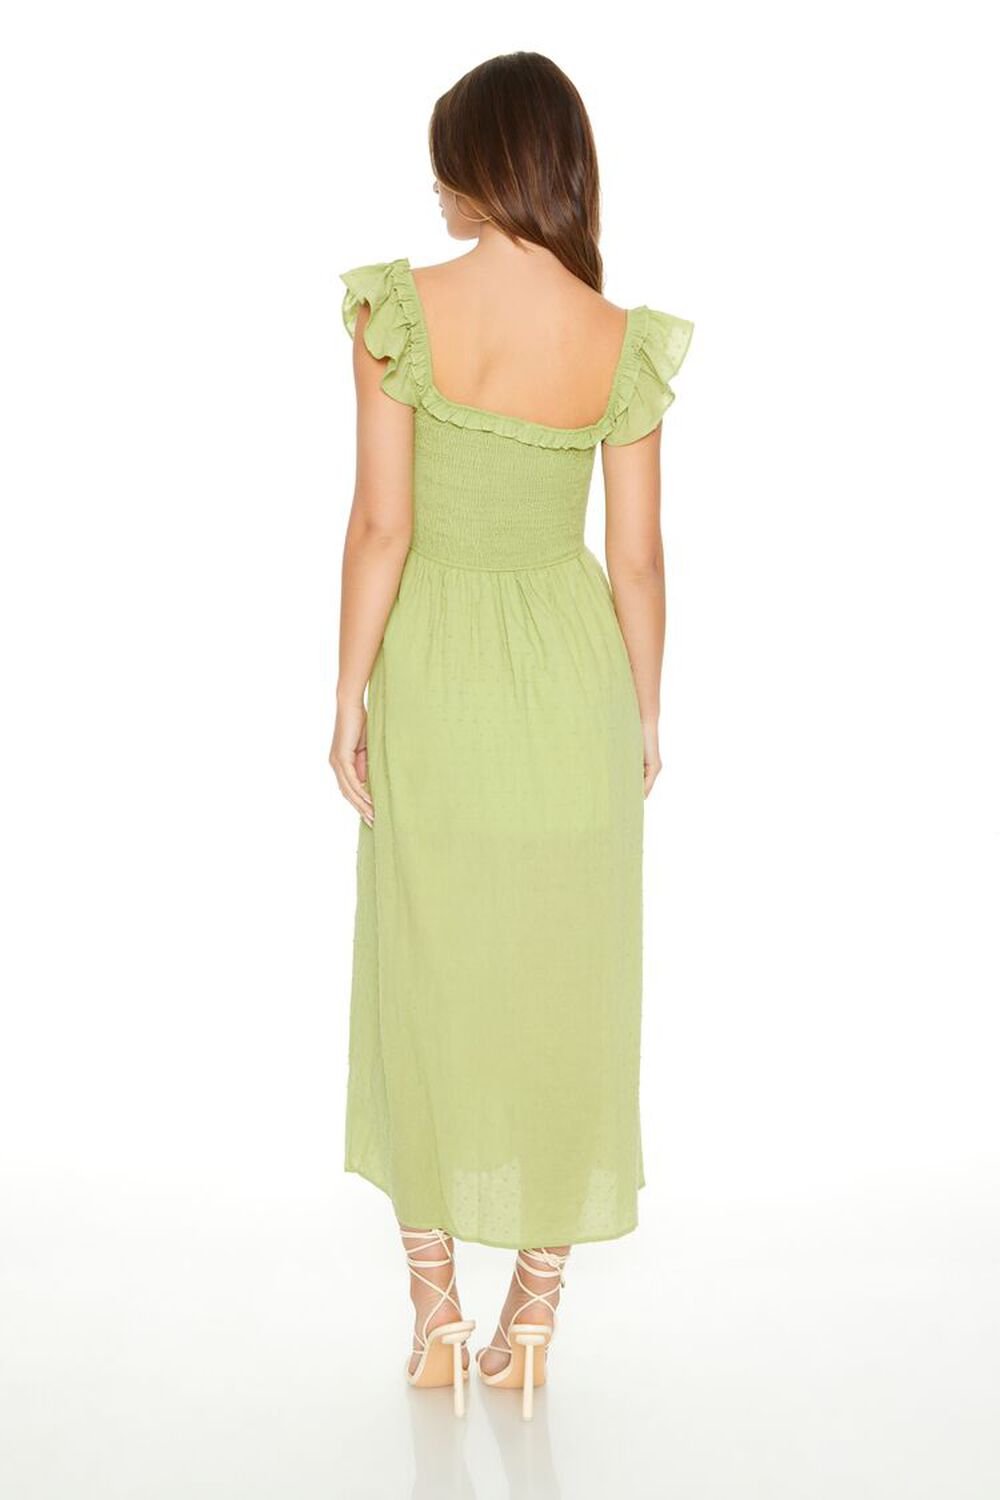 AVOCADO Butterfly-Sleeve Maxi Dress, image 3